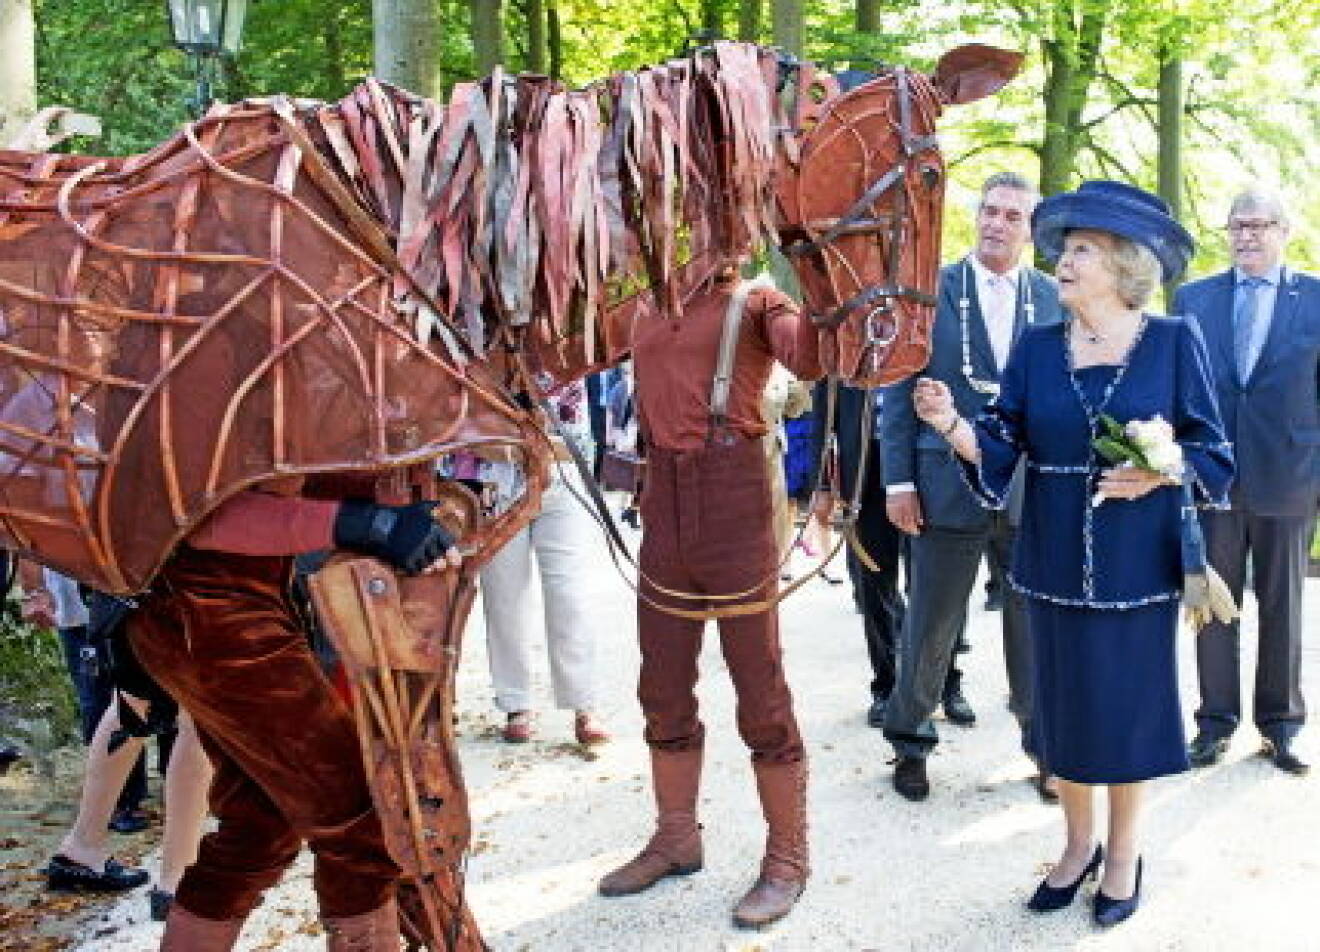 Princess Beatrix opens Pavilion Netherlands and the First World War